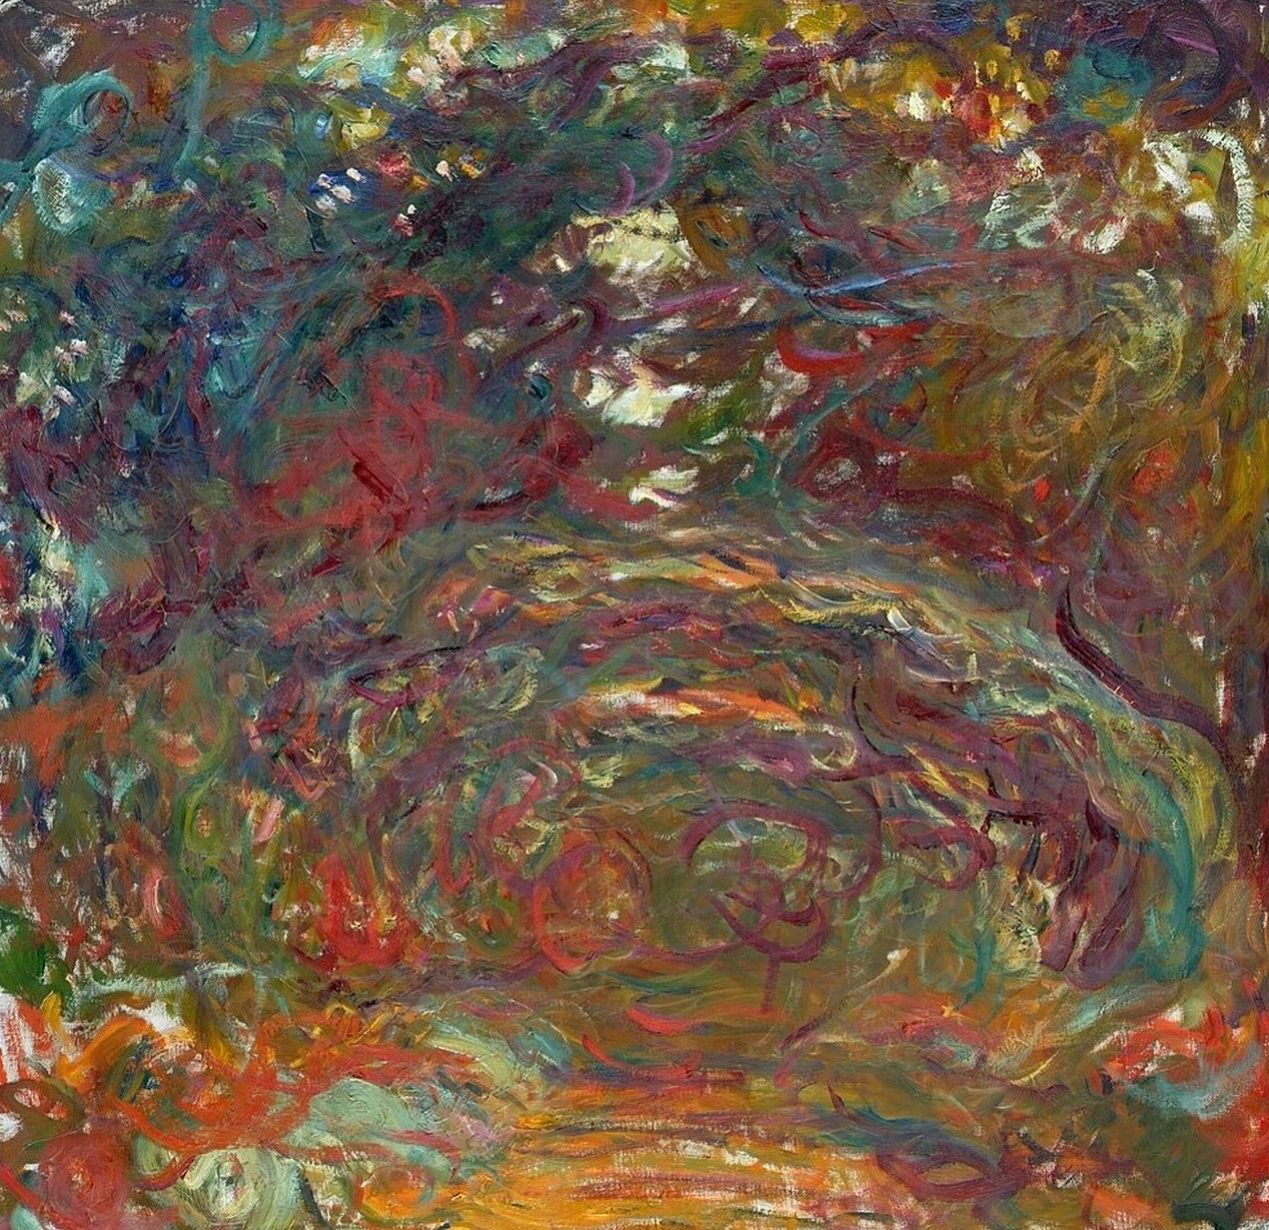 Claude+Monet-1840-1926 (388).jpg